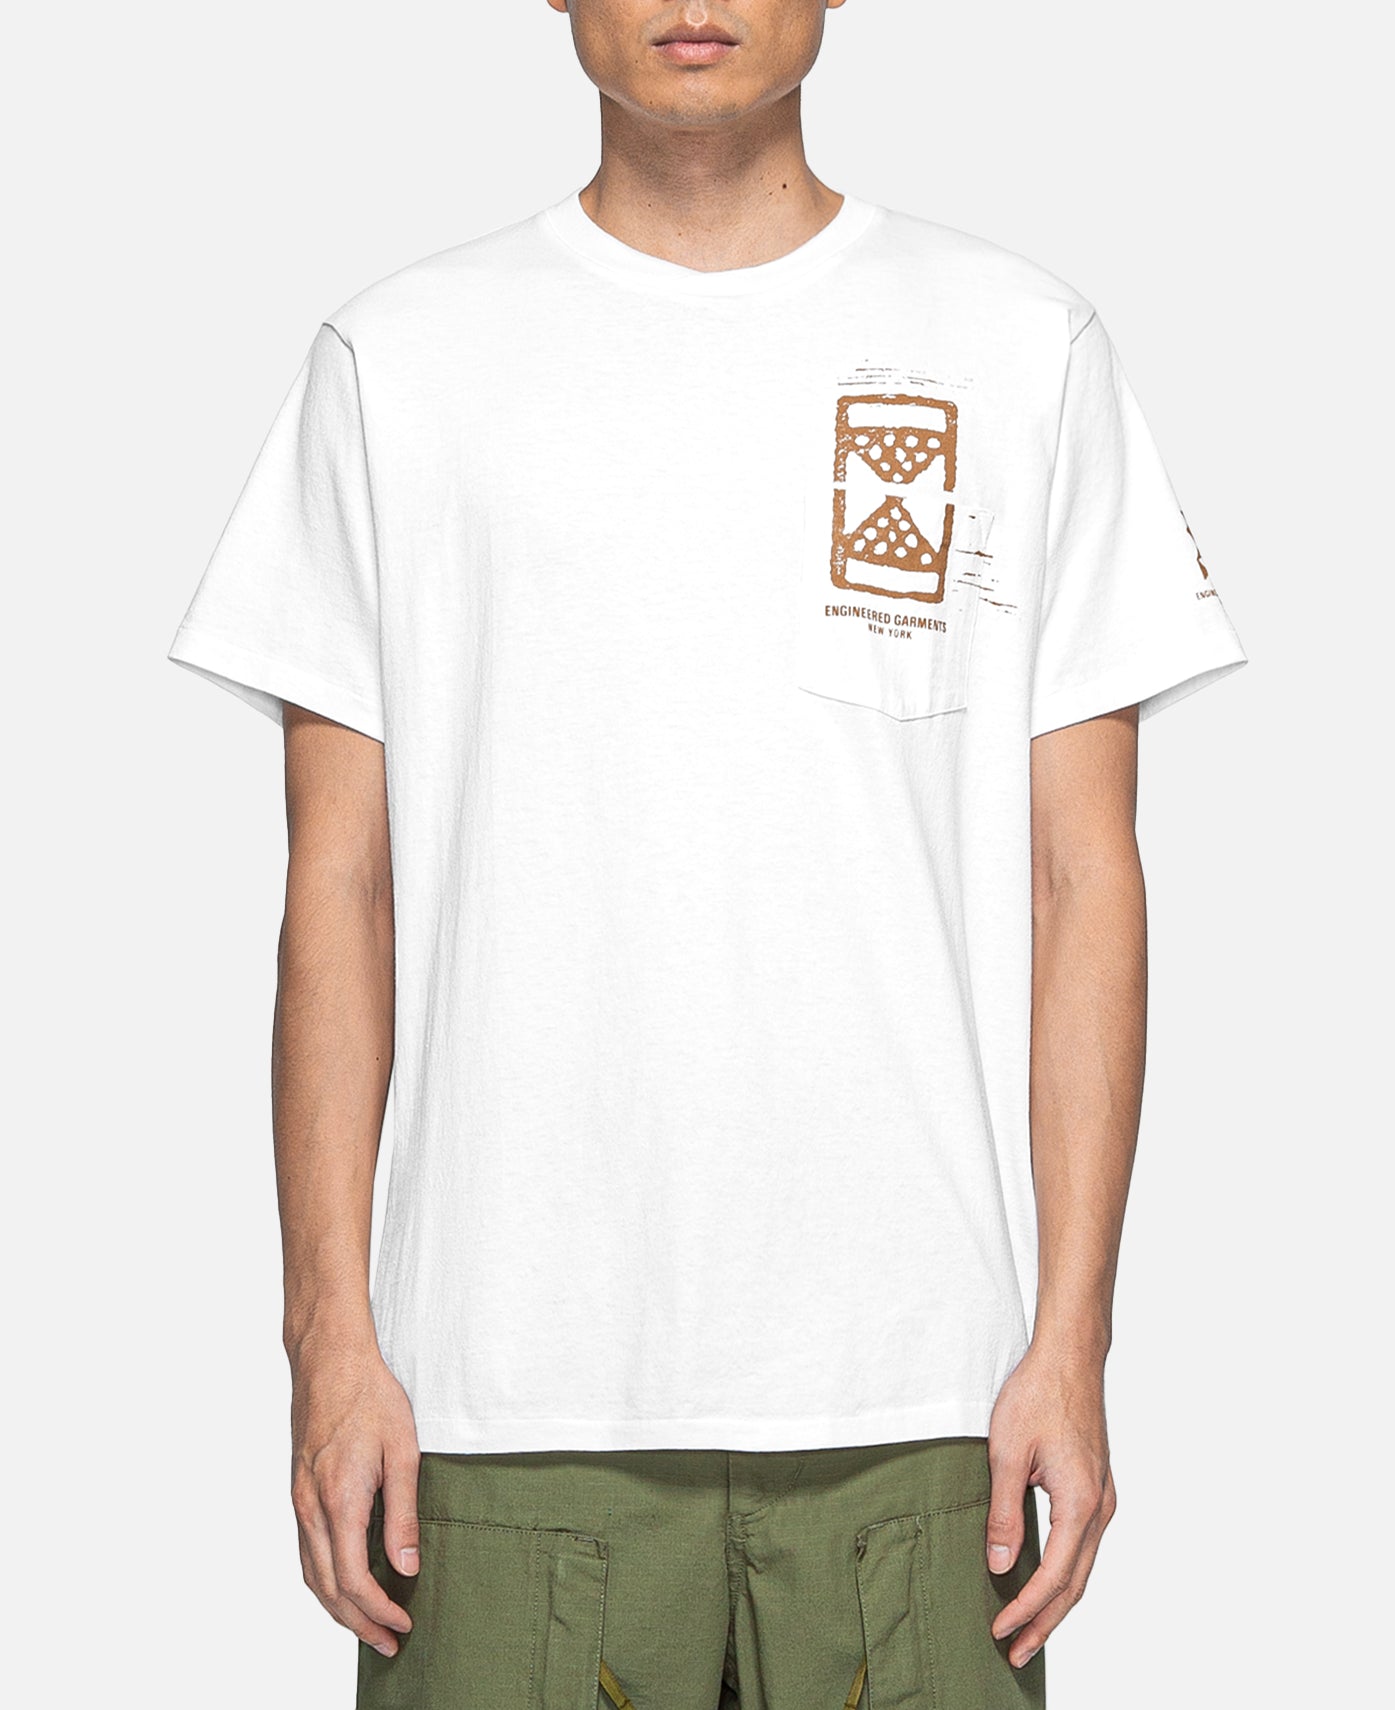 Engineered Garments - Printed Cross Crew Neck Pocket T-Shirt